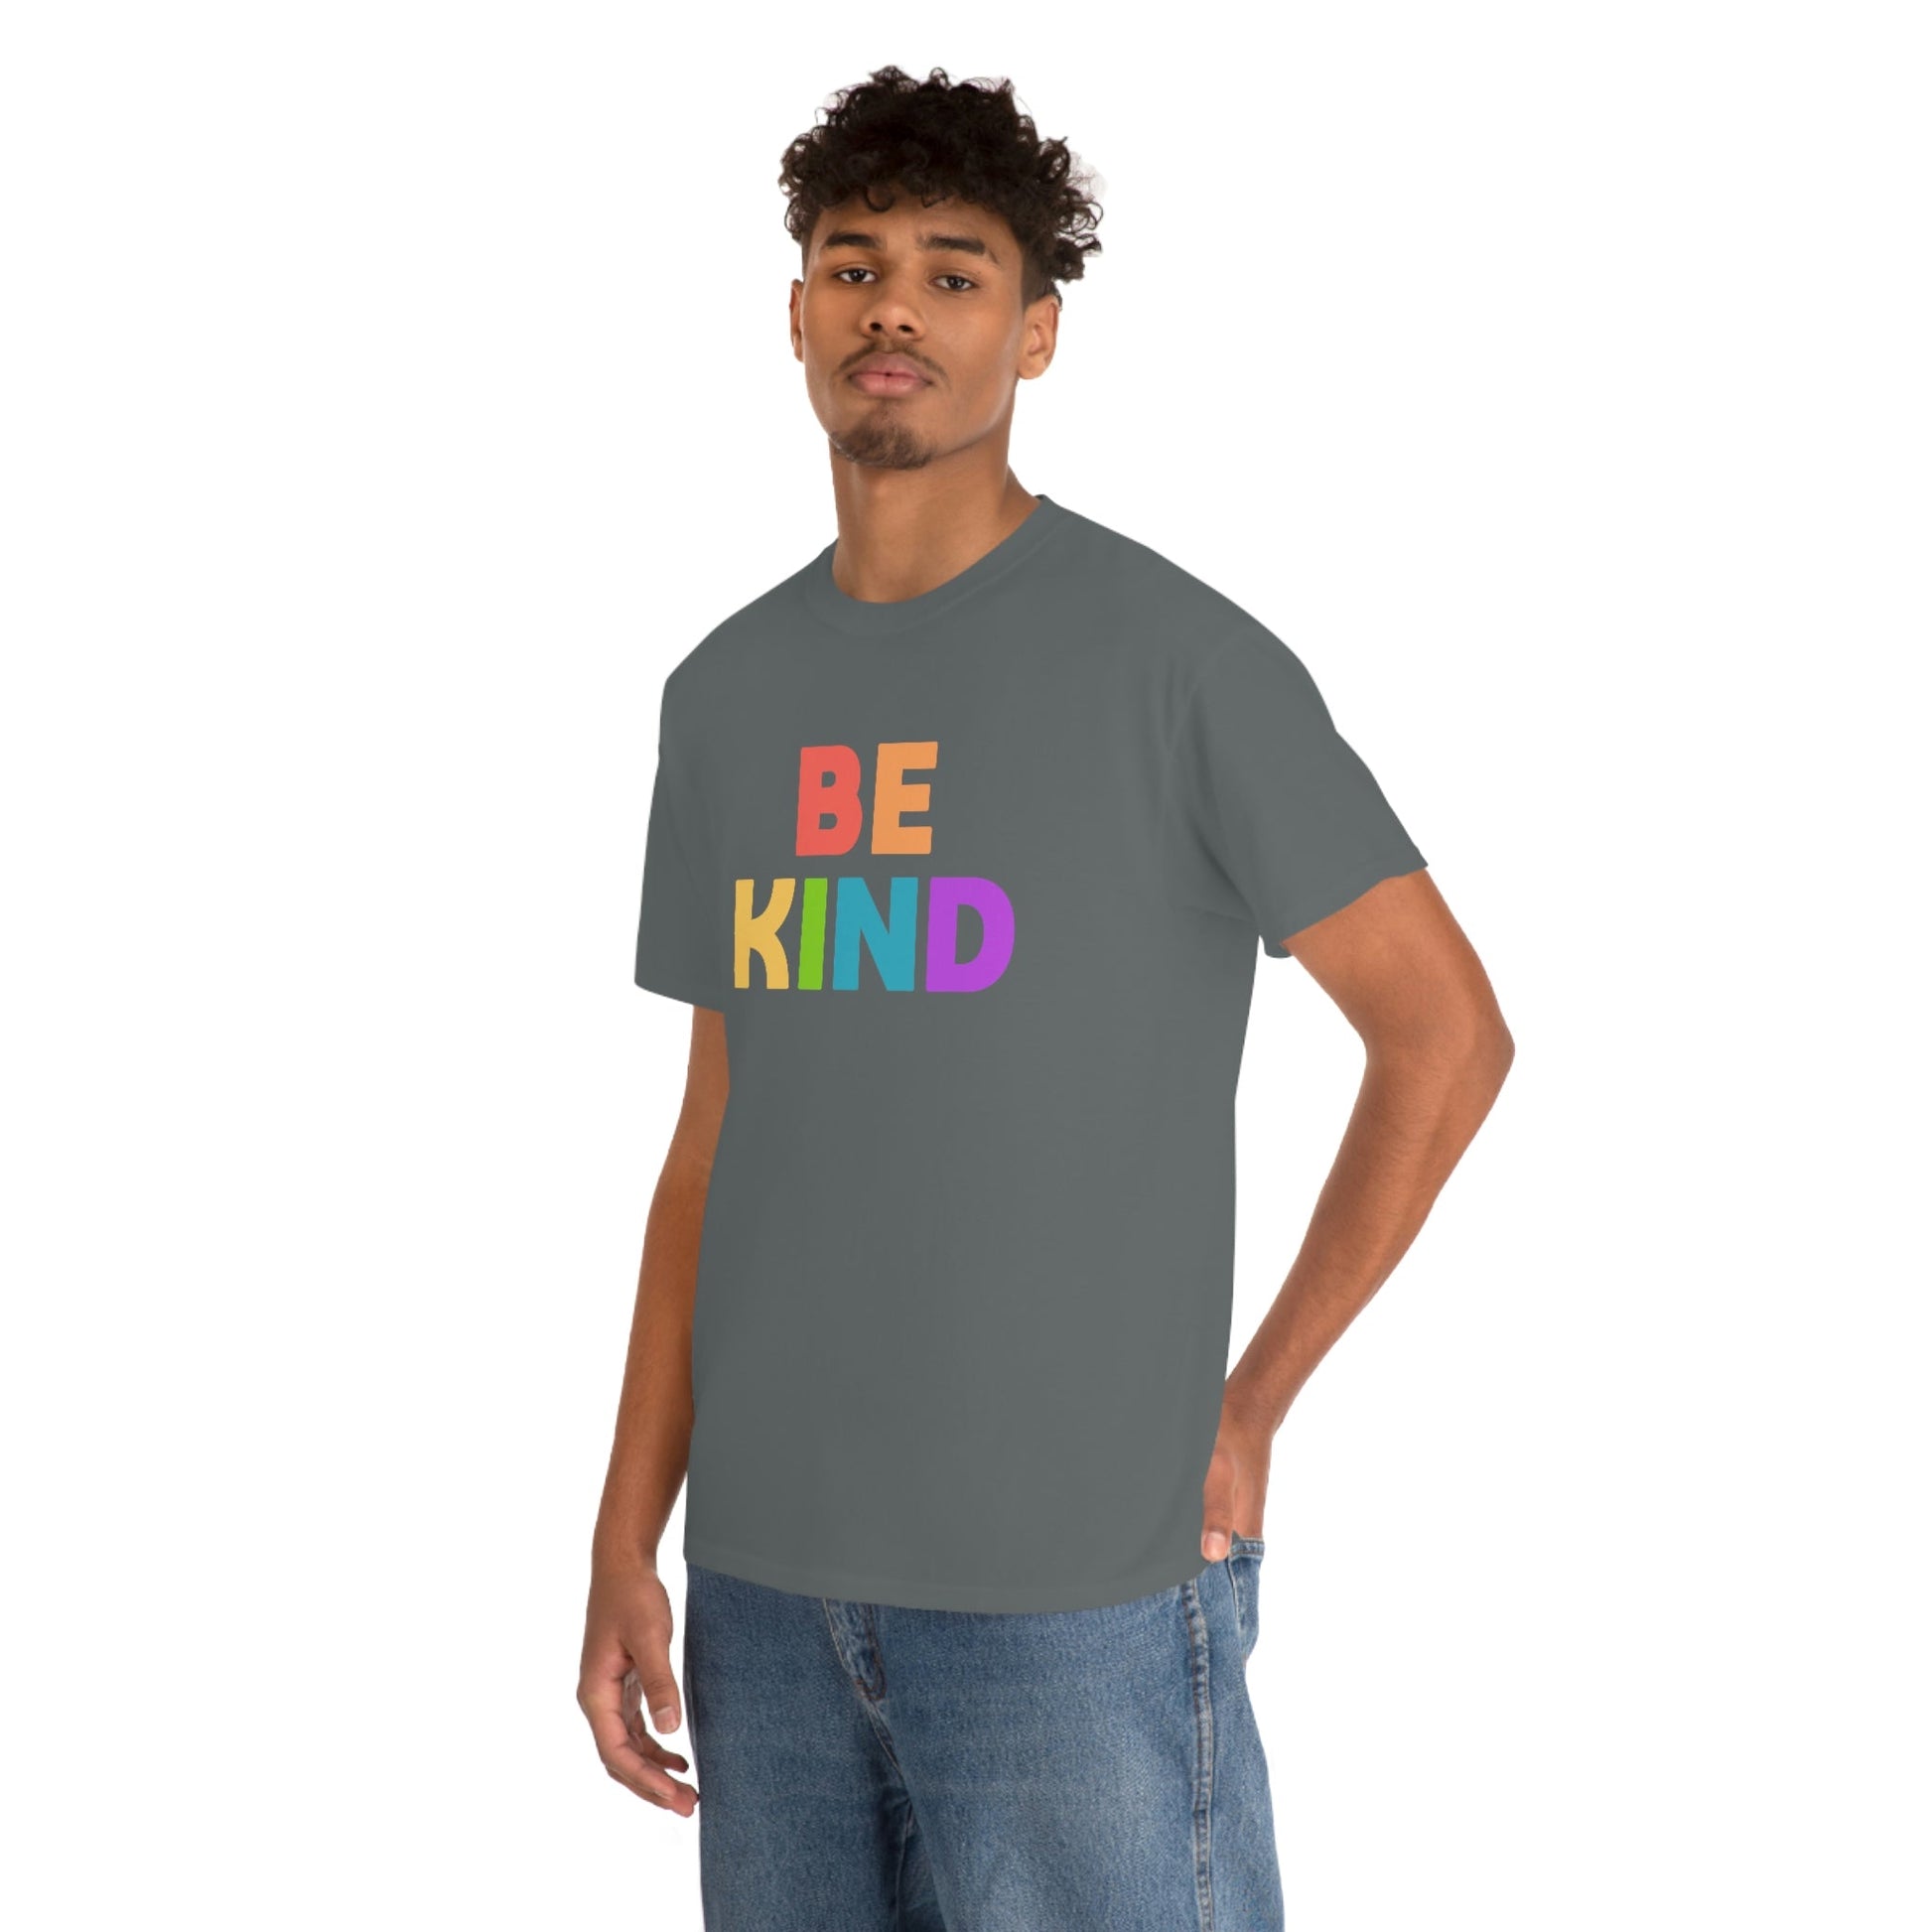 Be Kind Rainbow | Text Tees - Detezi Designs-61533721089229829841